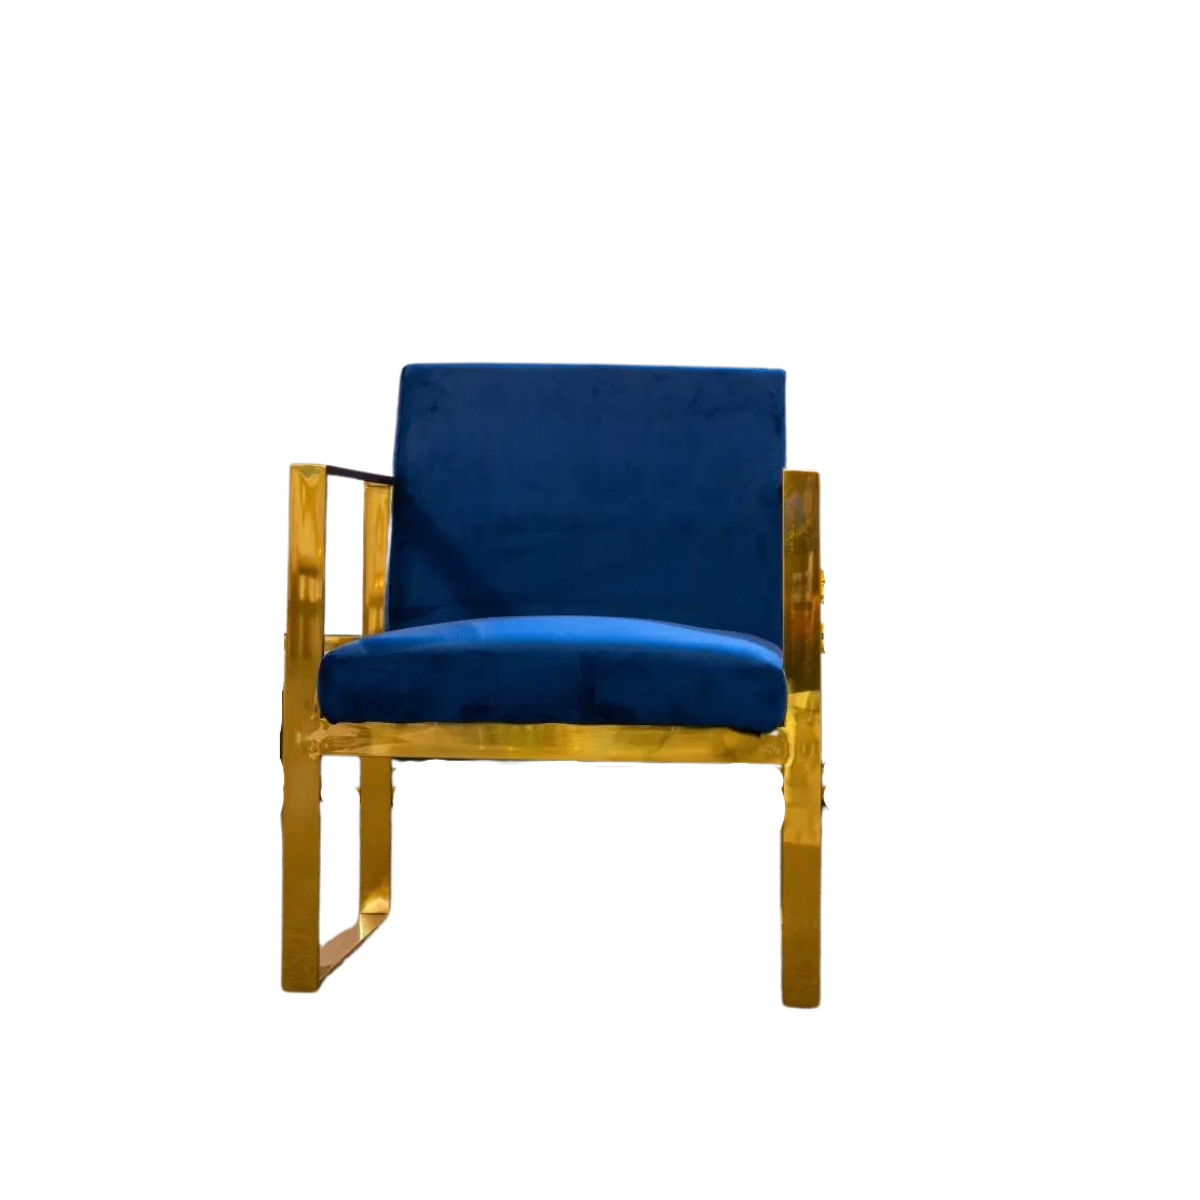 gold-navy-armchair-cornerview